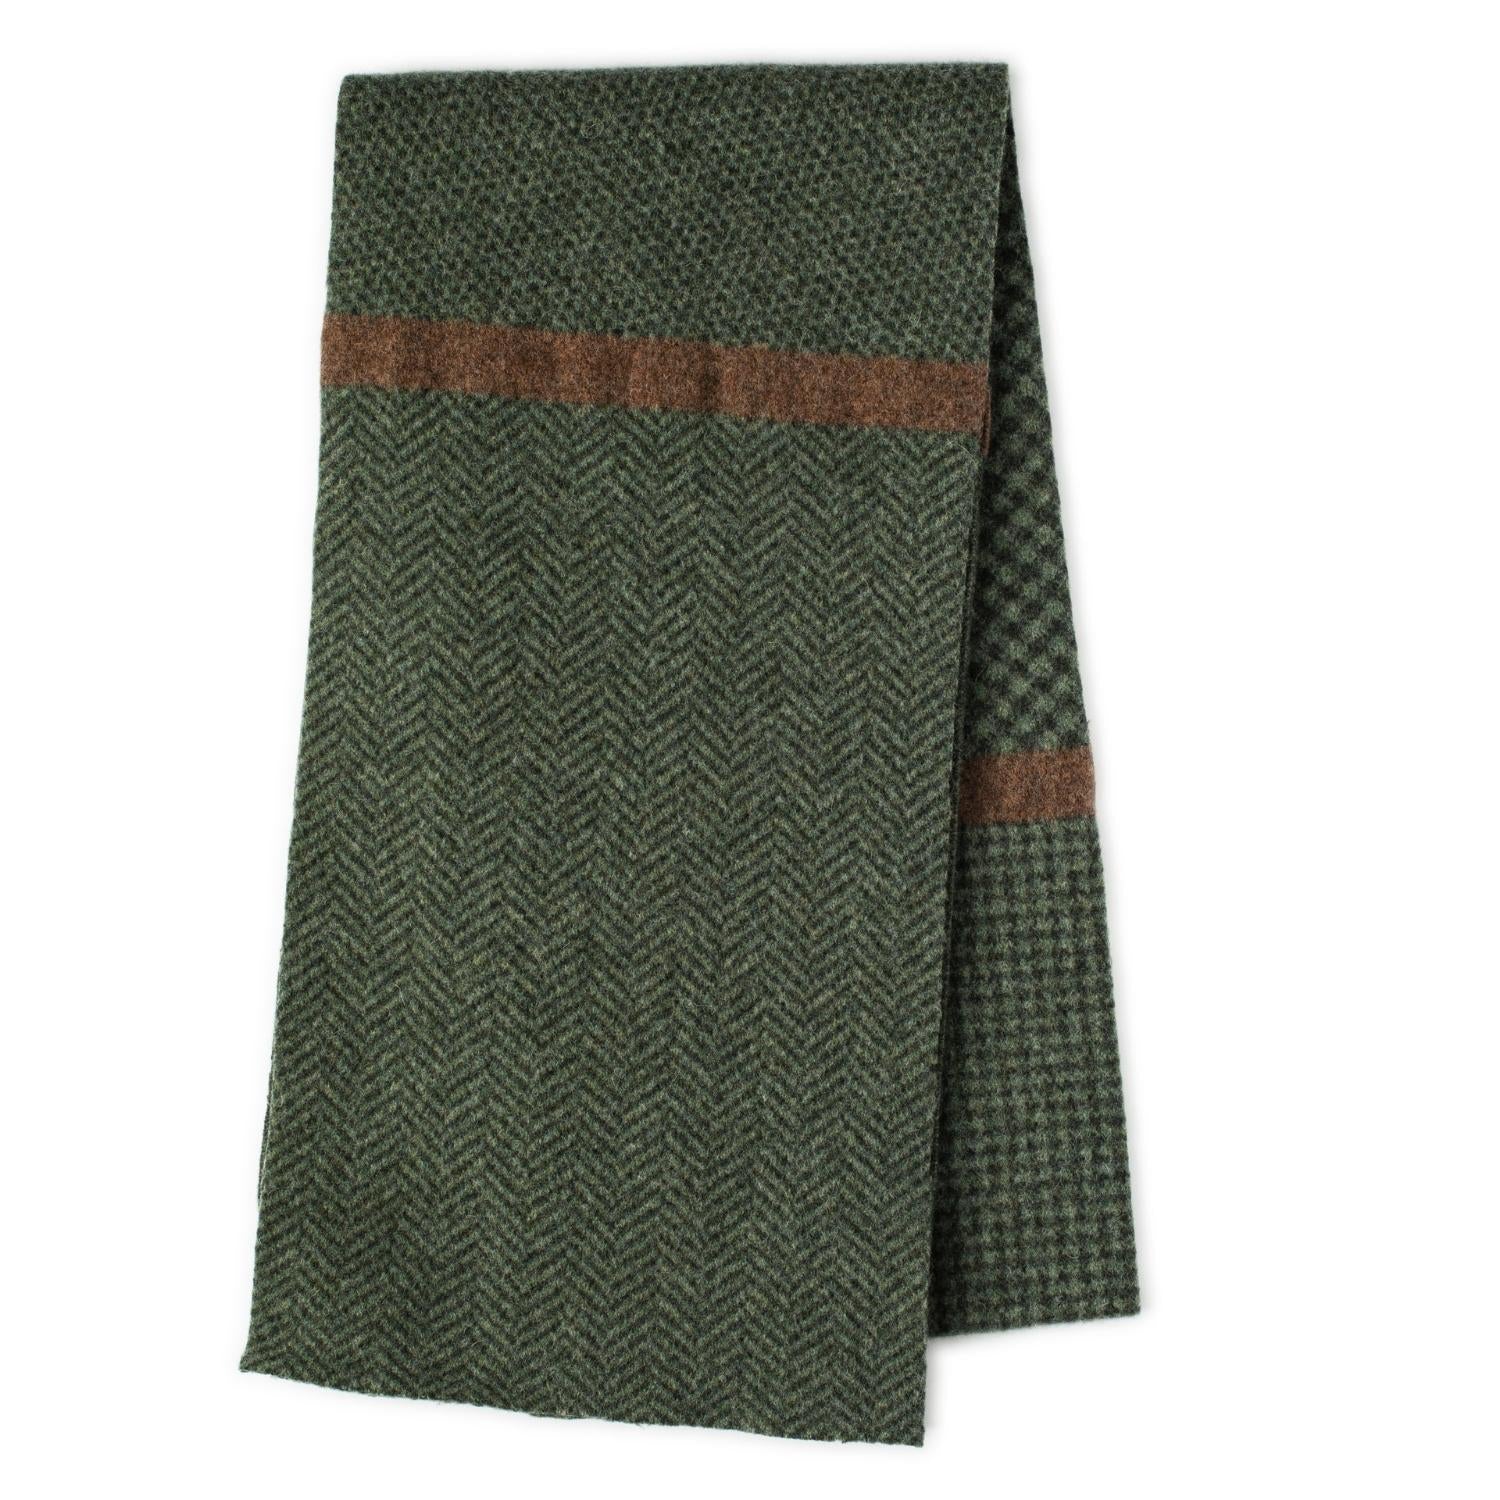 Patterned scarf - herringbone scarf - green